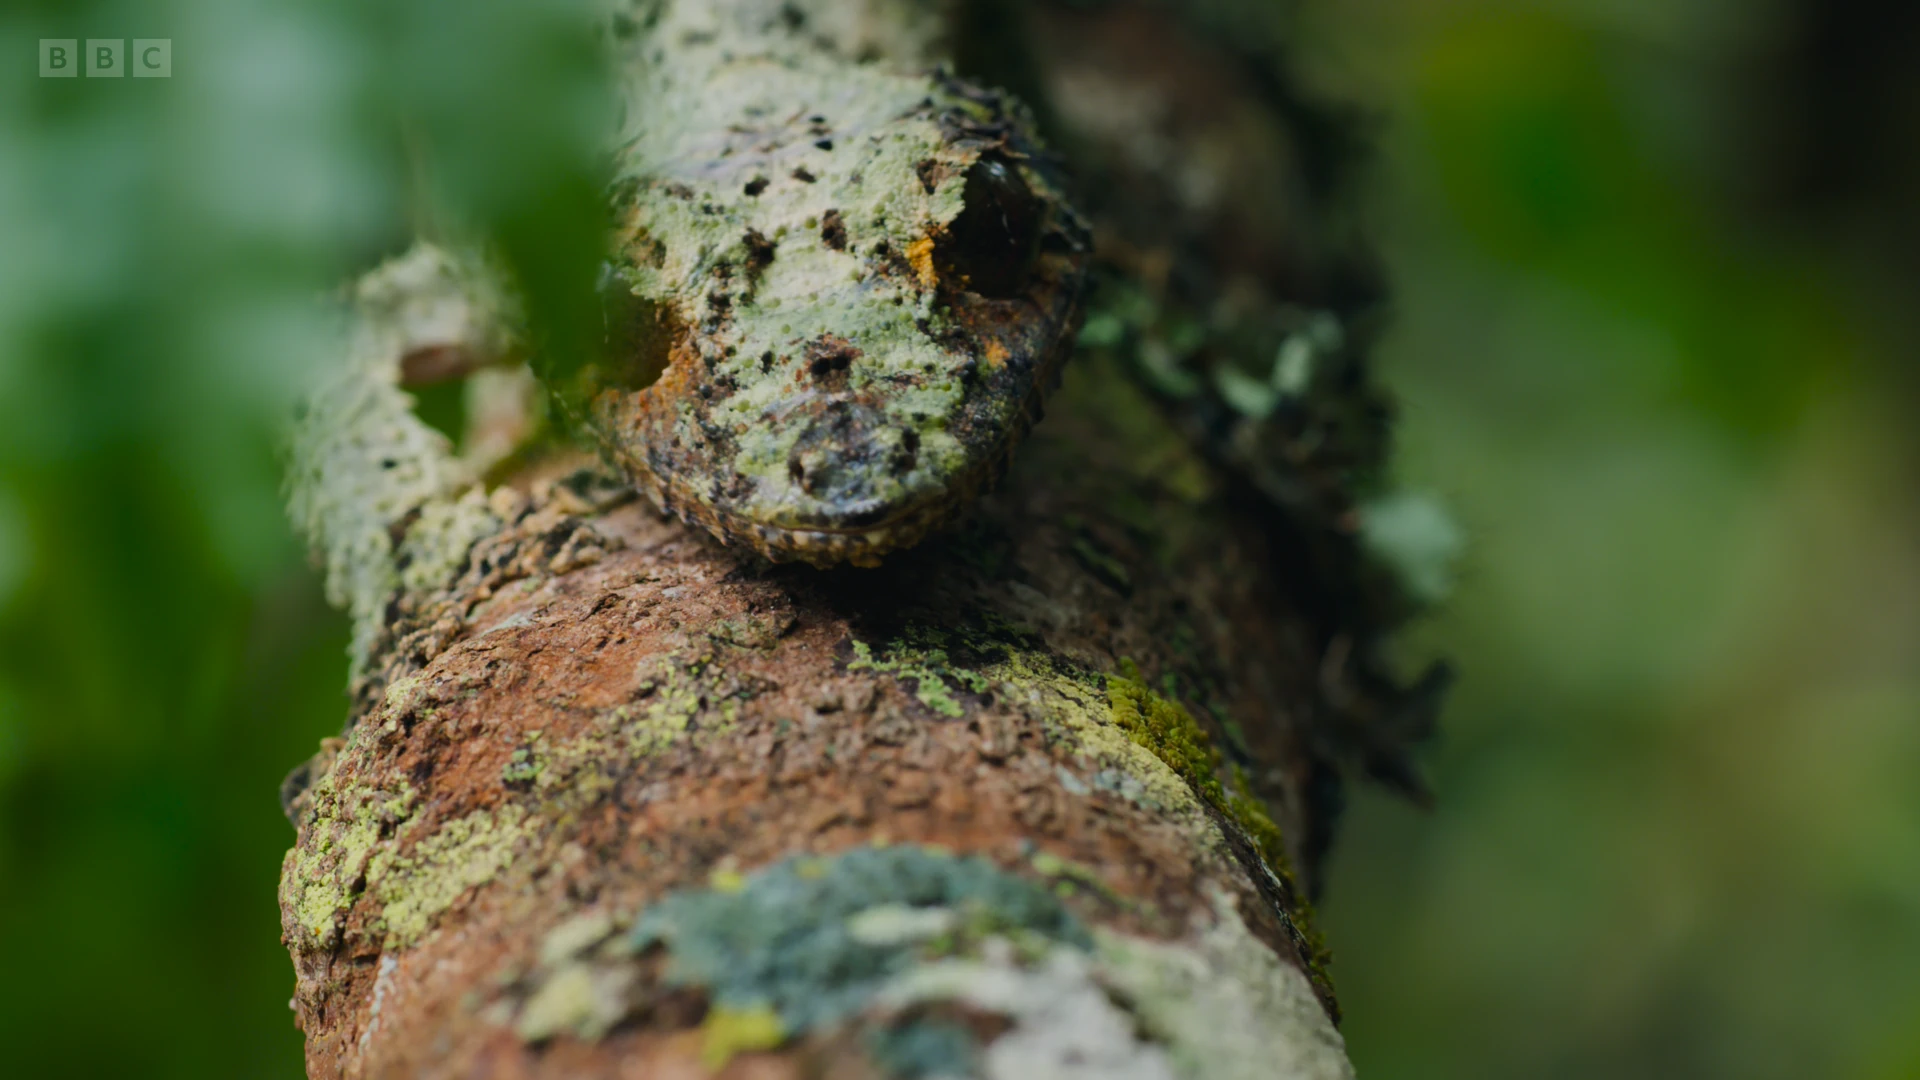 Leaf tailed gecko sp. ([genus Uroplatus]) as shown in Planet Earth II - Jungles